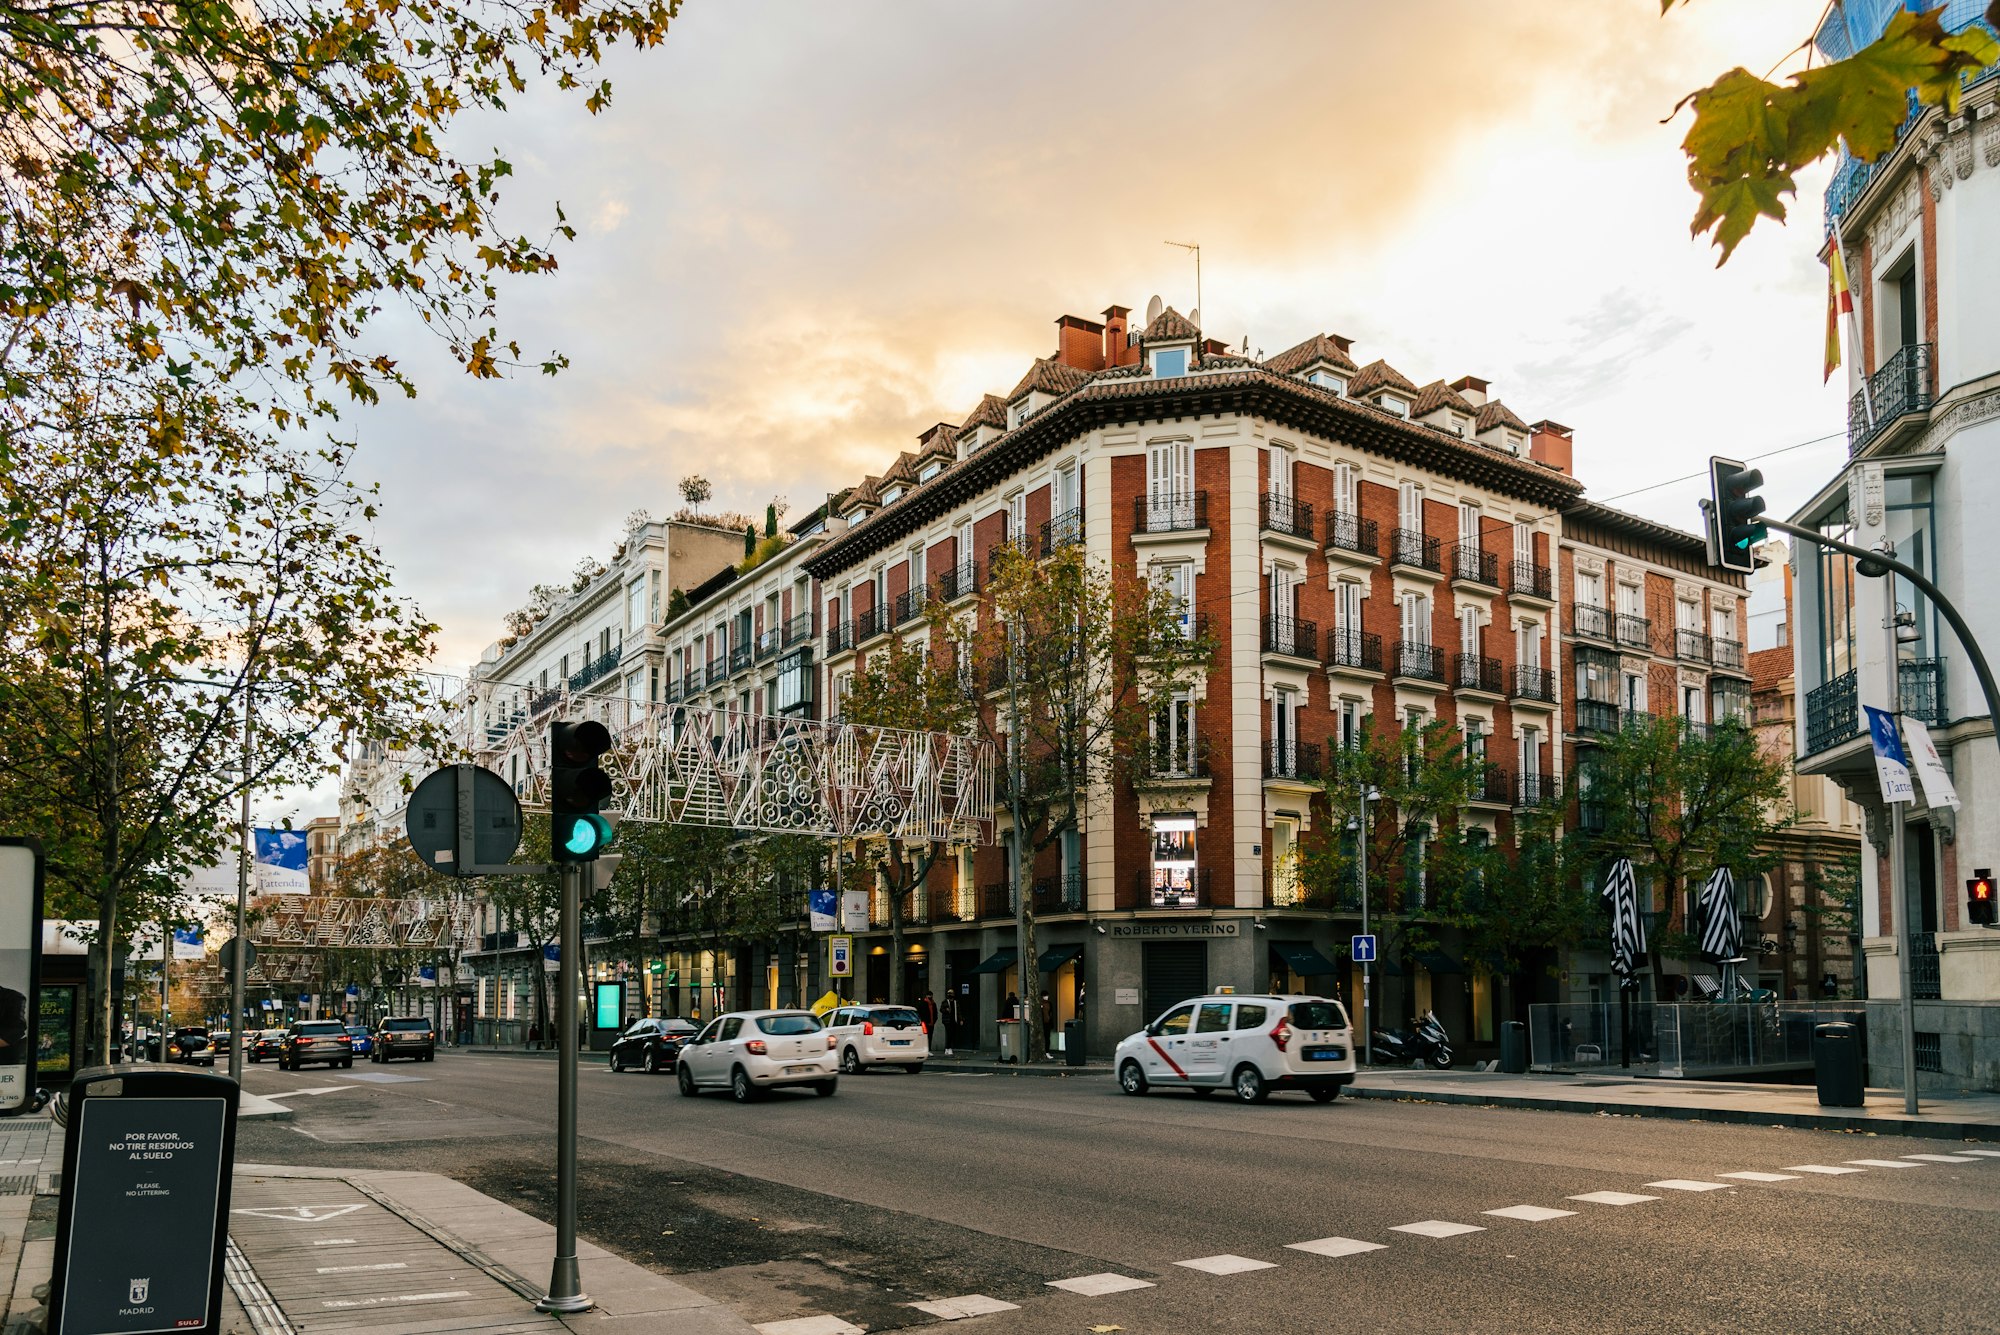 Scenic view of Serrano Street in Madrid